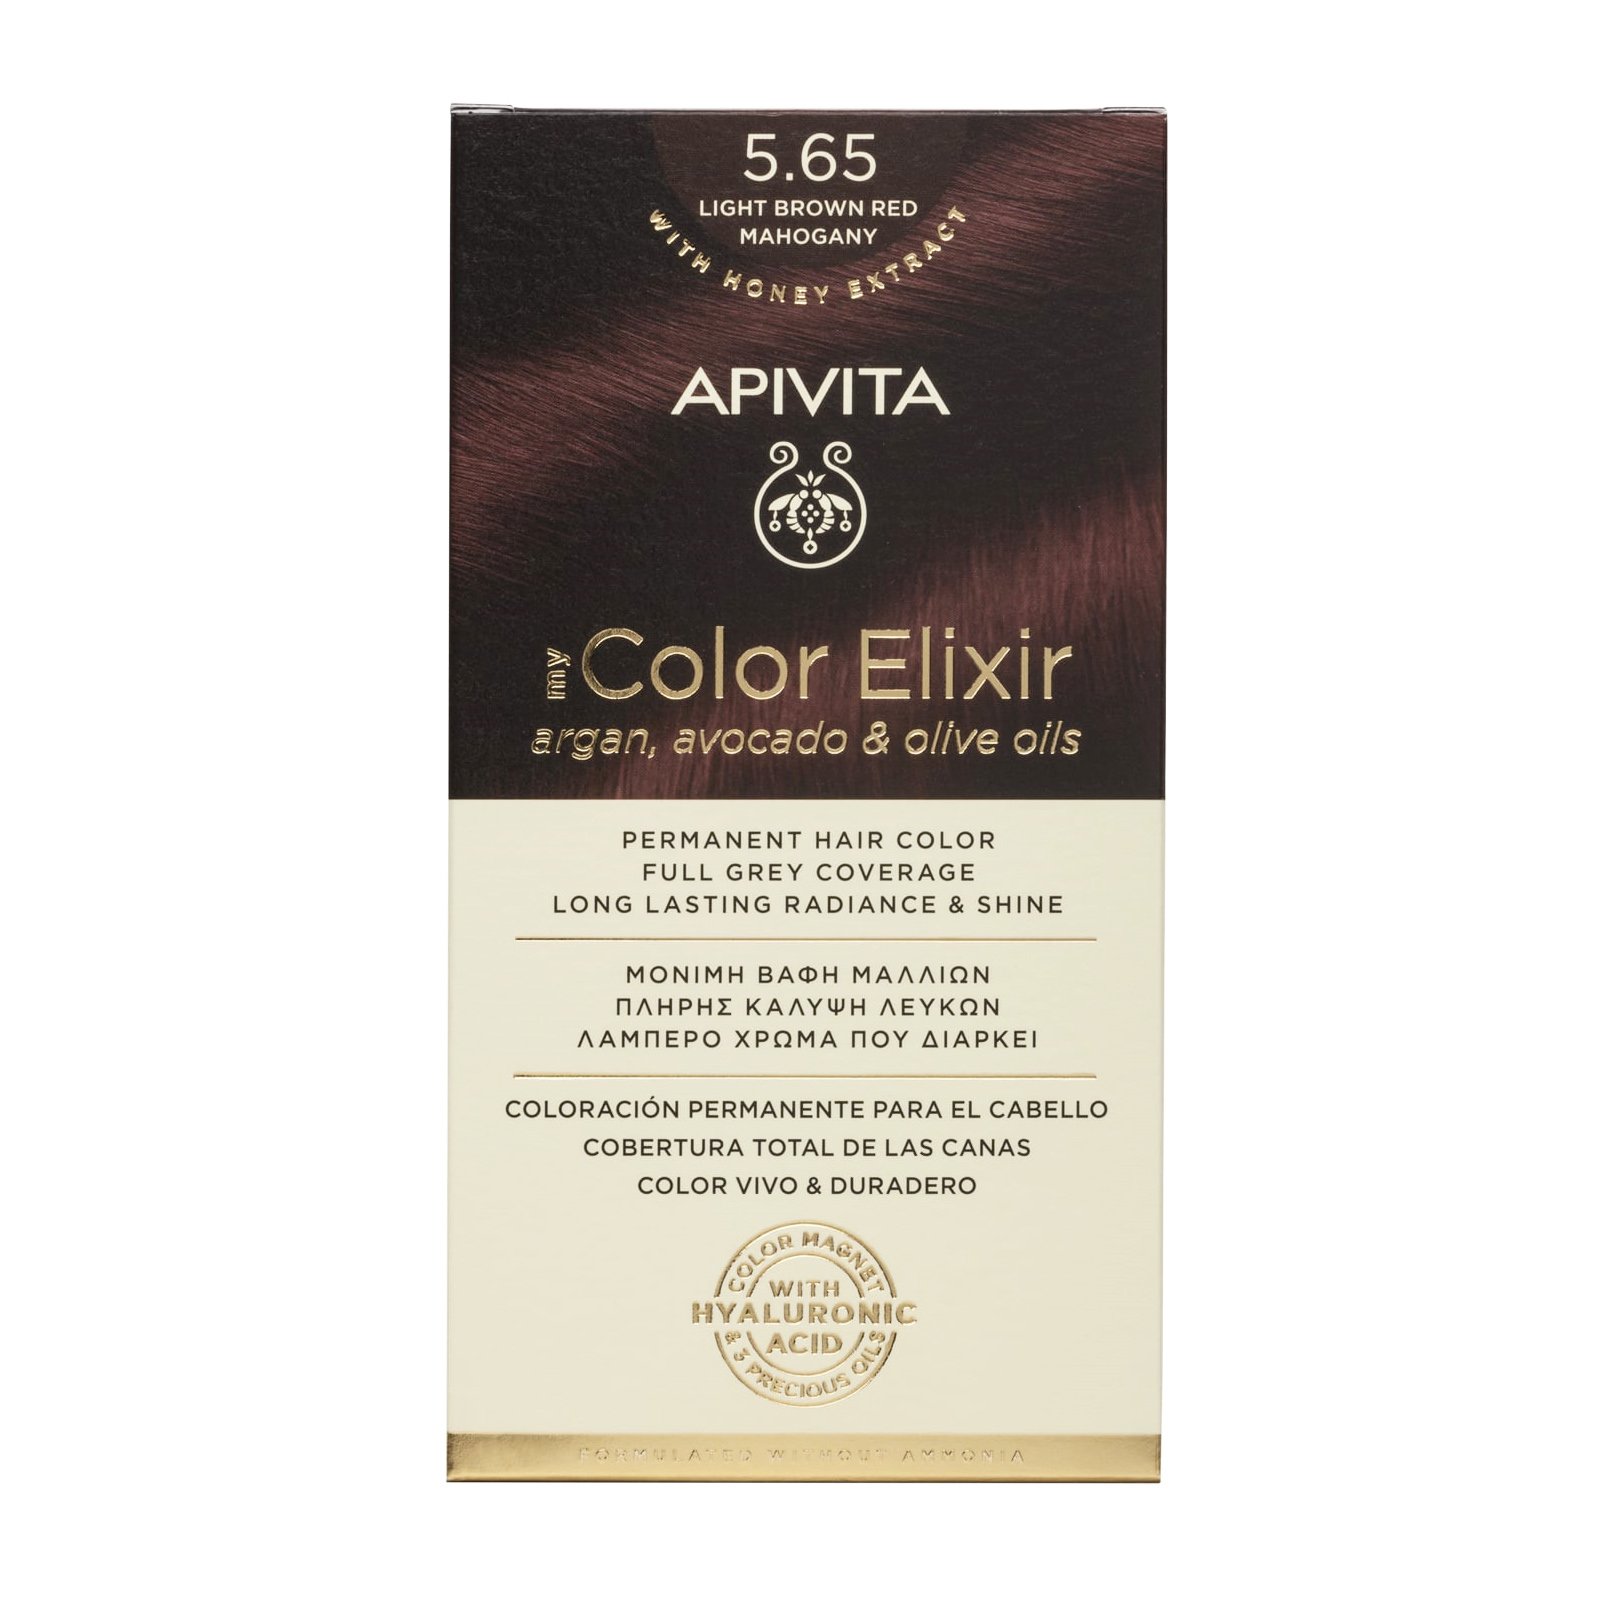 Apivita My Color Elixir Μόνιμη Βαφή Μαλλιών με Καινοτόμο Σύστημα Color Magnet που Σταθεροποιεί και Σφραγίζει το Χρώμα στην Τρίχα – N 5.65 KASTANO ANOIXTO KOKKINO MAONI